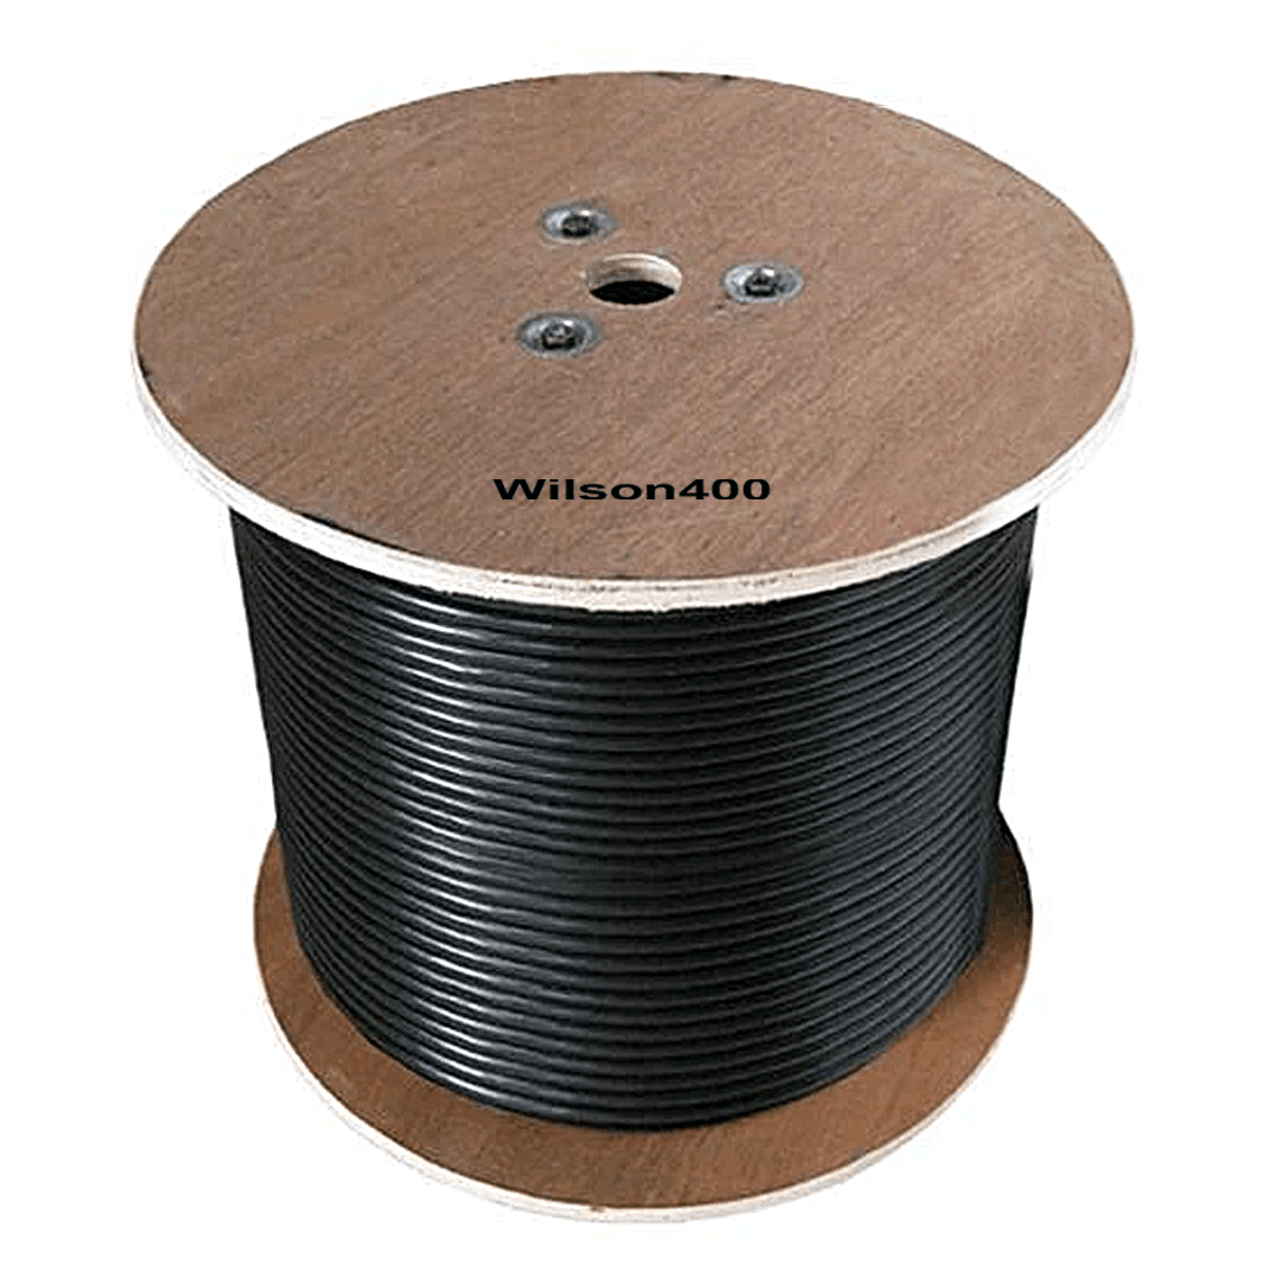 Wilson400 952301 - 1,000' Spool 400 Coax Cable